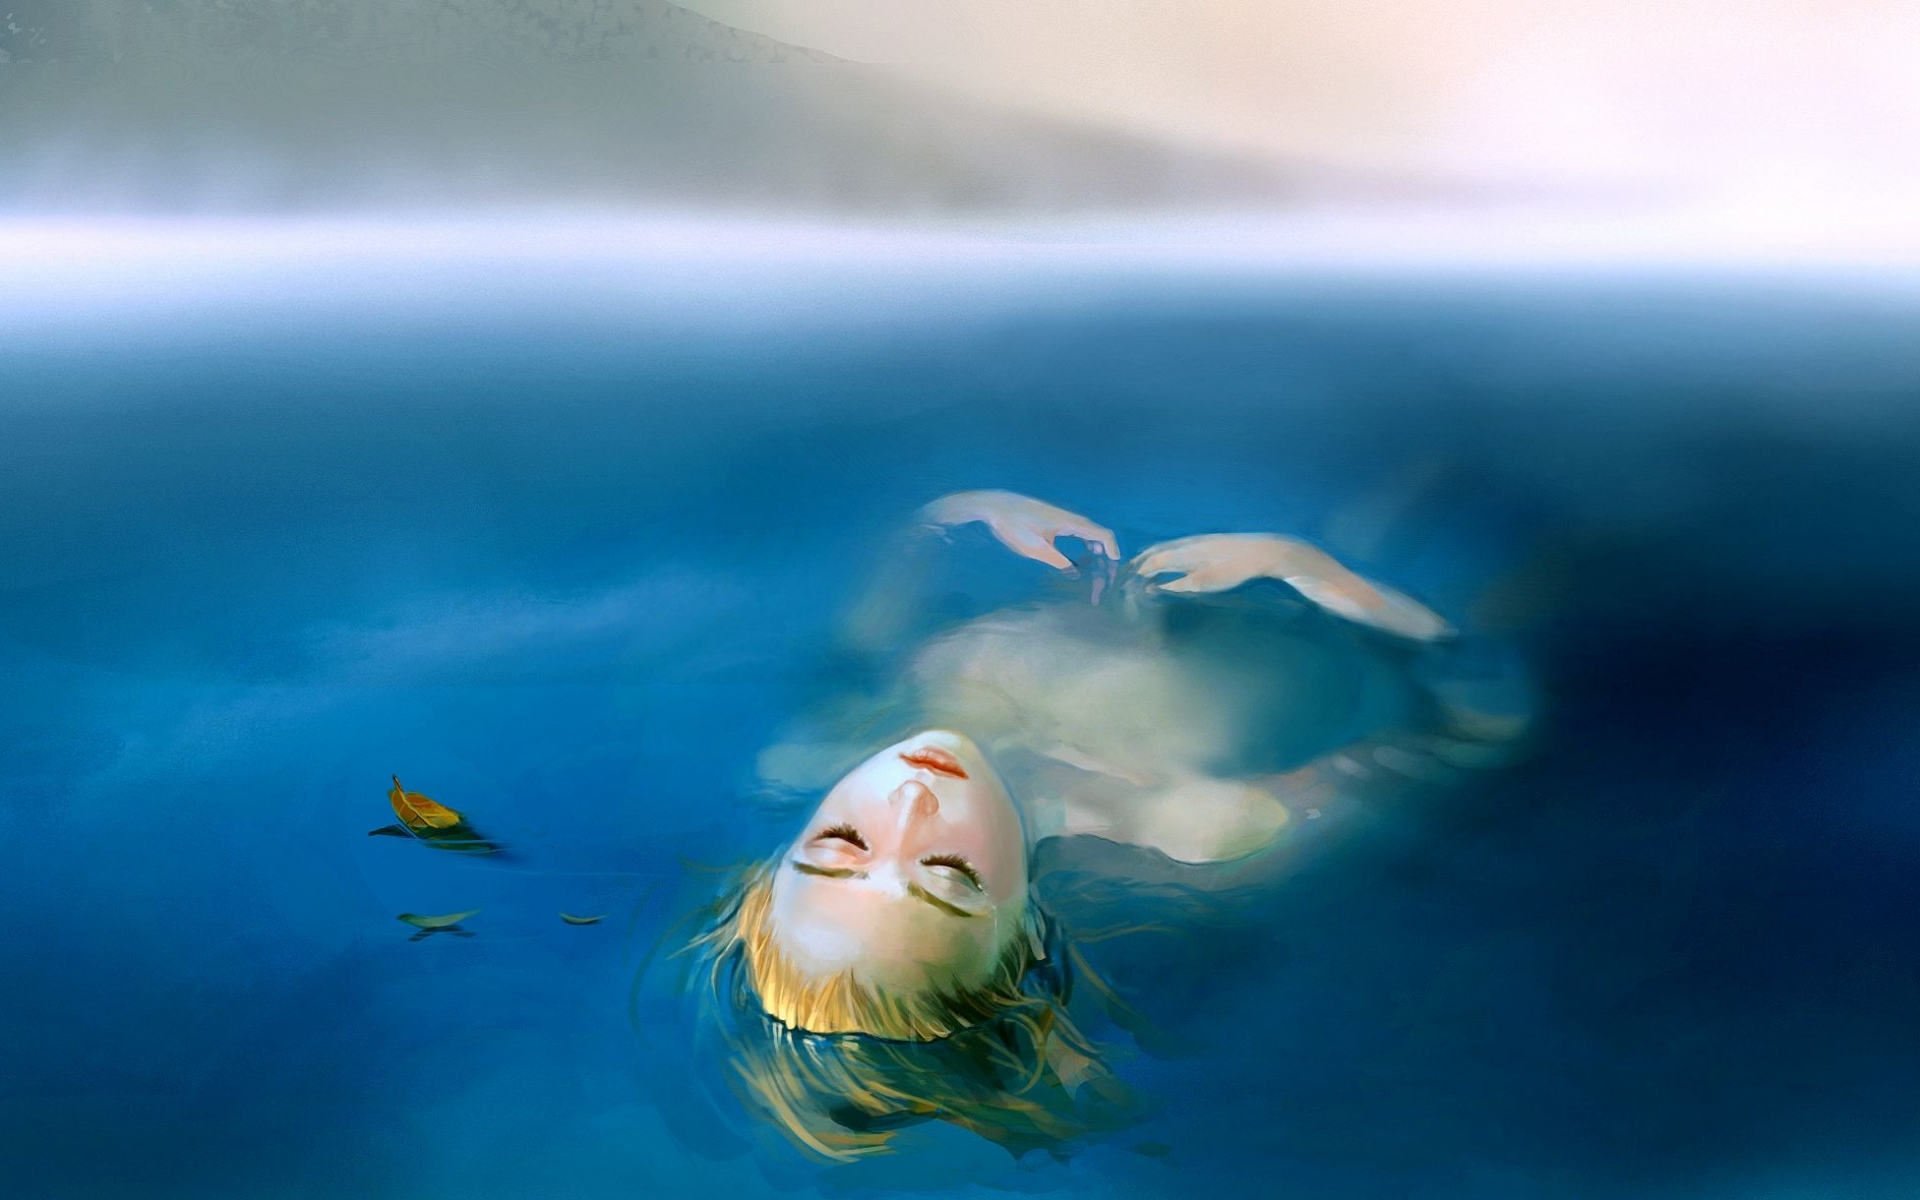 Видишь там на воде. Девушка лежит в воде. Под водой. Фотосессия в воде. Девушка в воде картина.